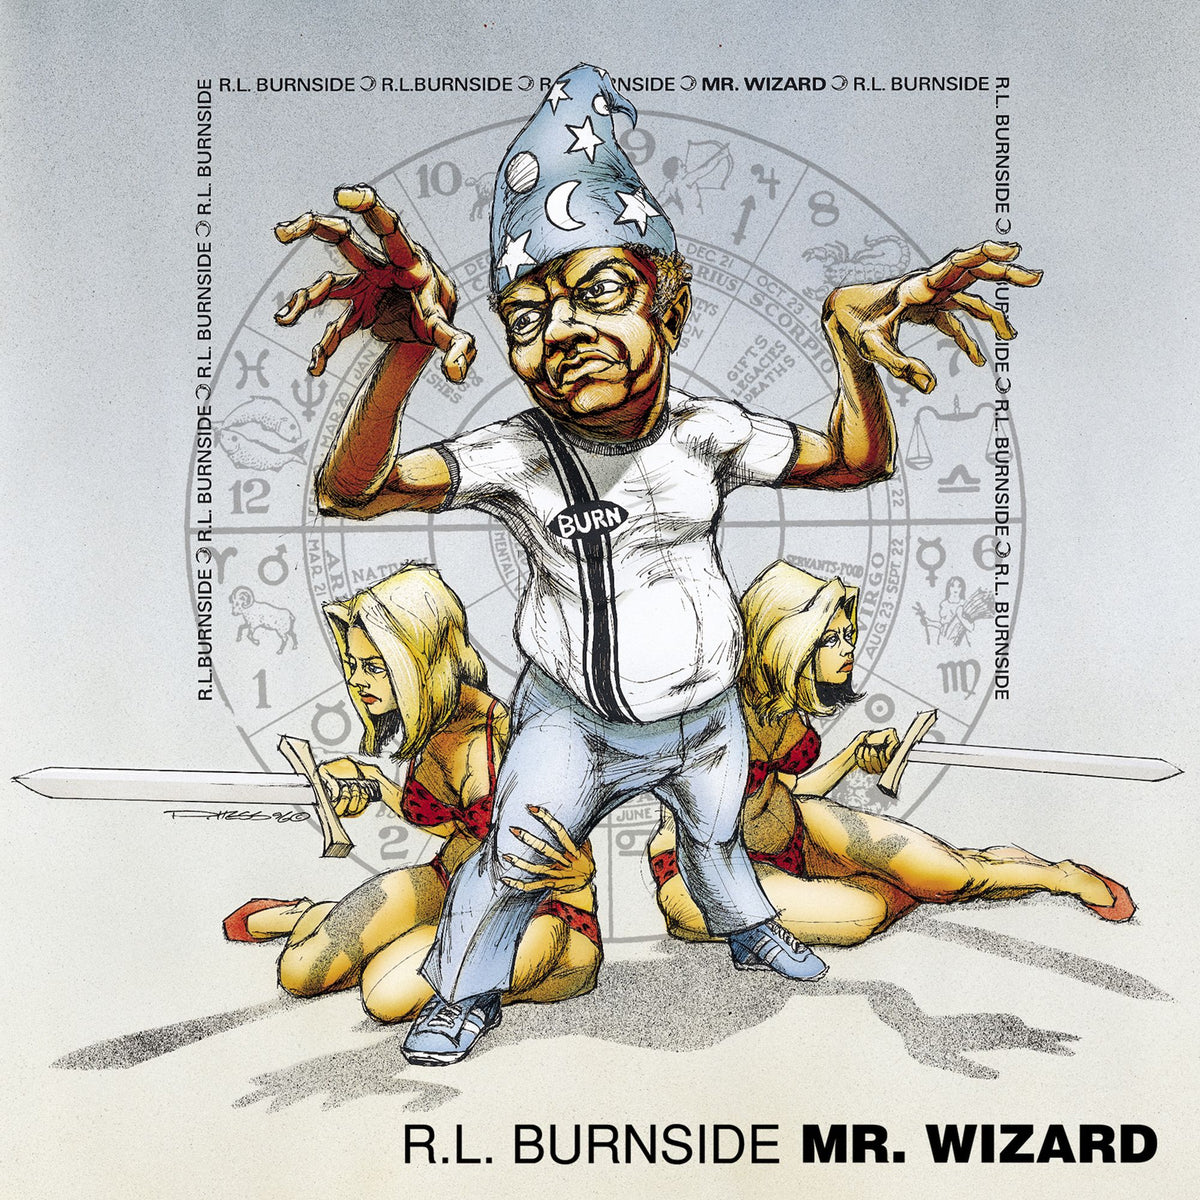 R.L. BURNSIDE: Mr. Wizard